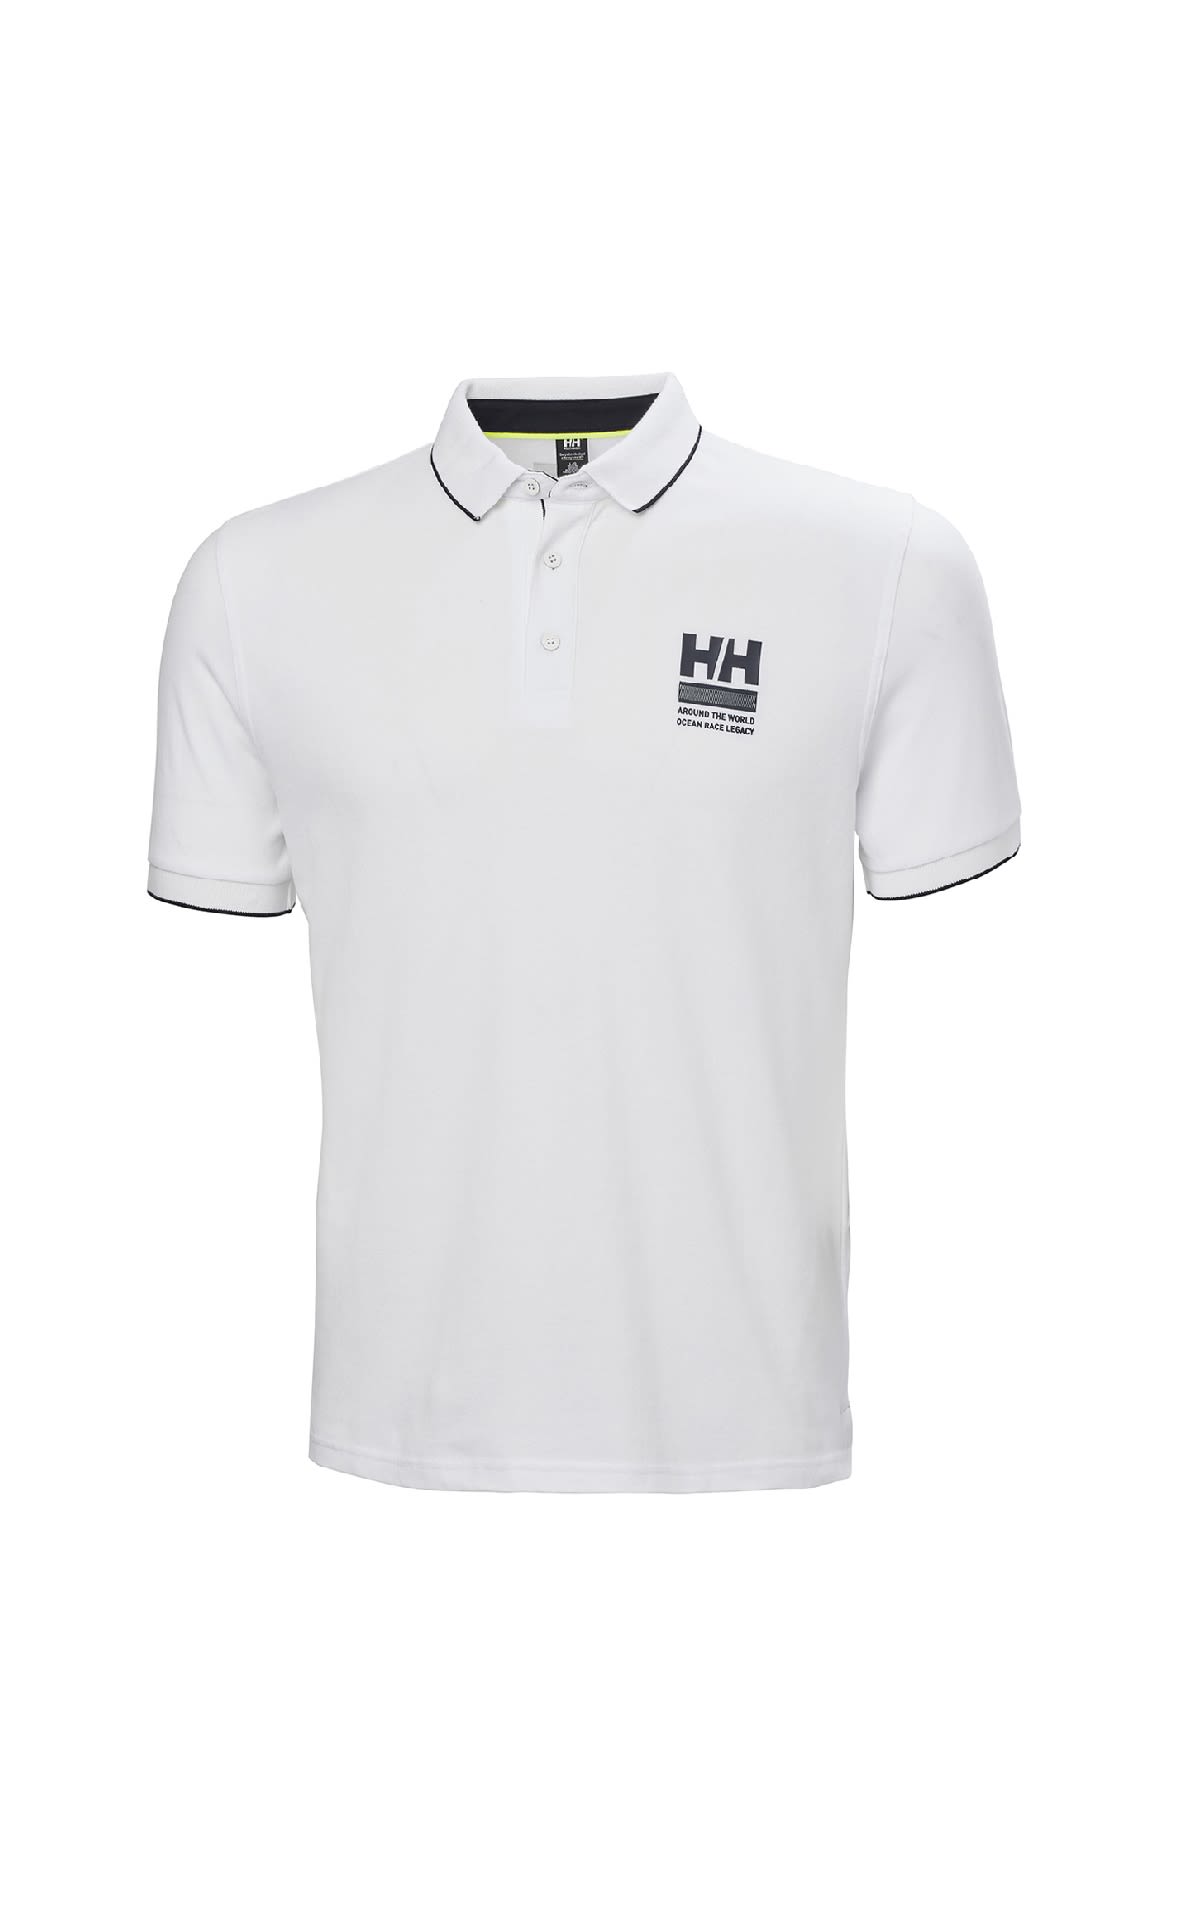 Helly Hansen White polo shirt with logo